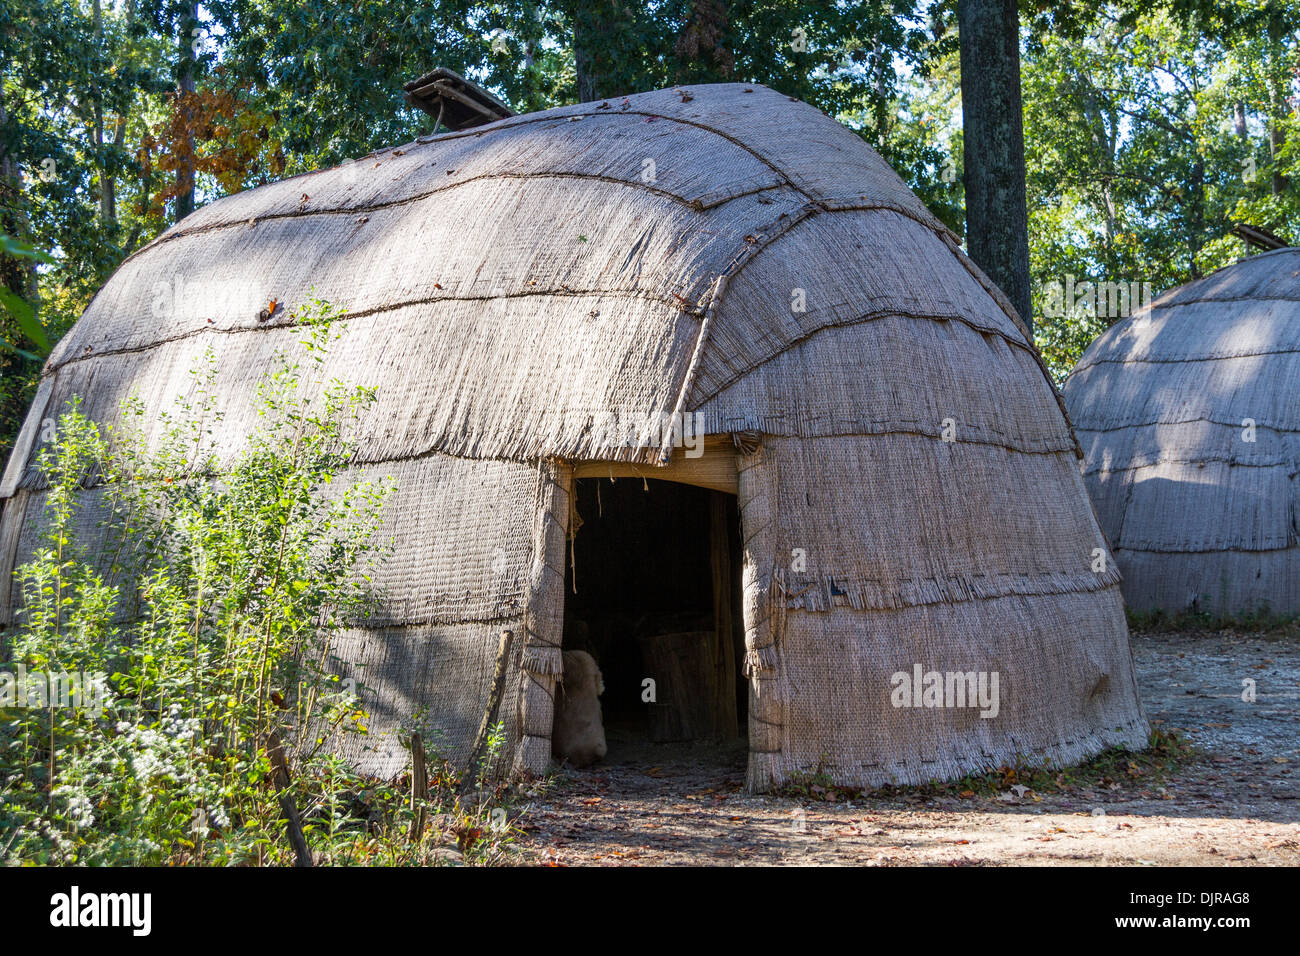 Powhatan Native American Village at Jamestown Settlement living history museum in Jamestown, Virginia. Stock Photo